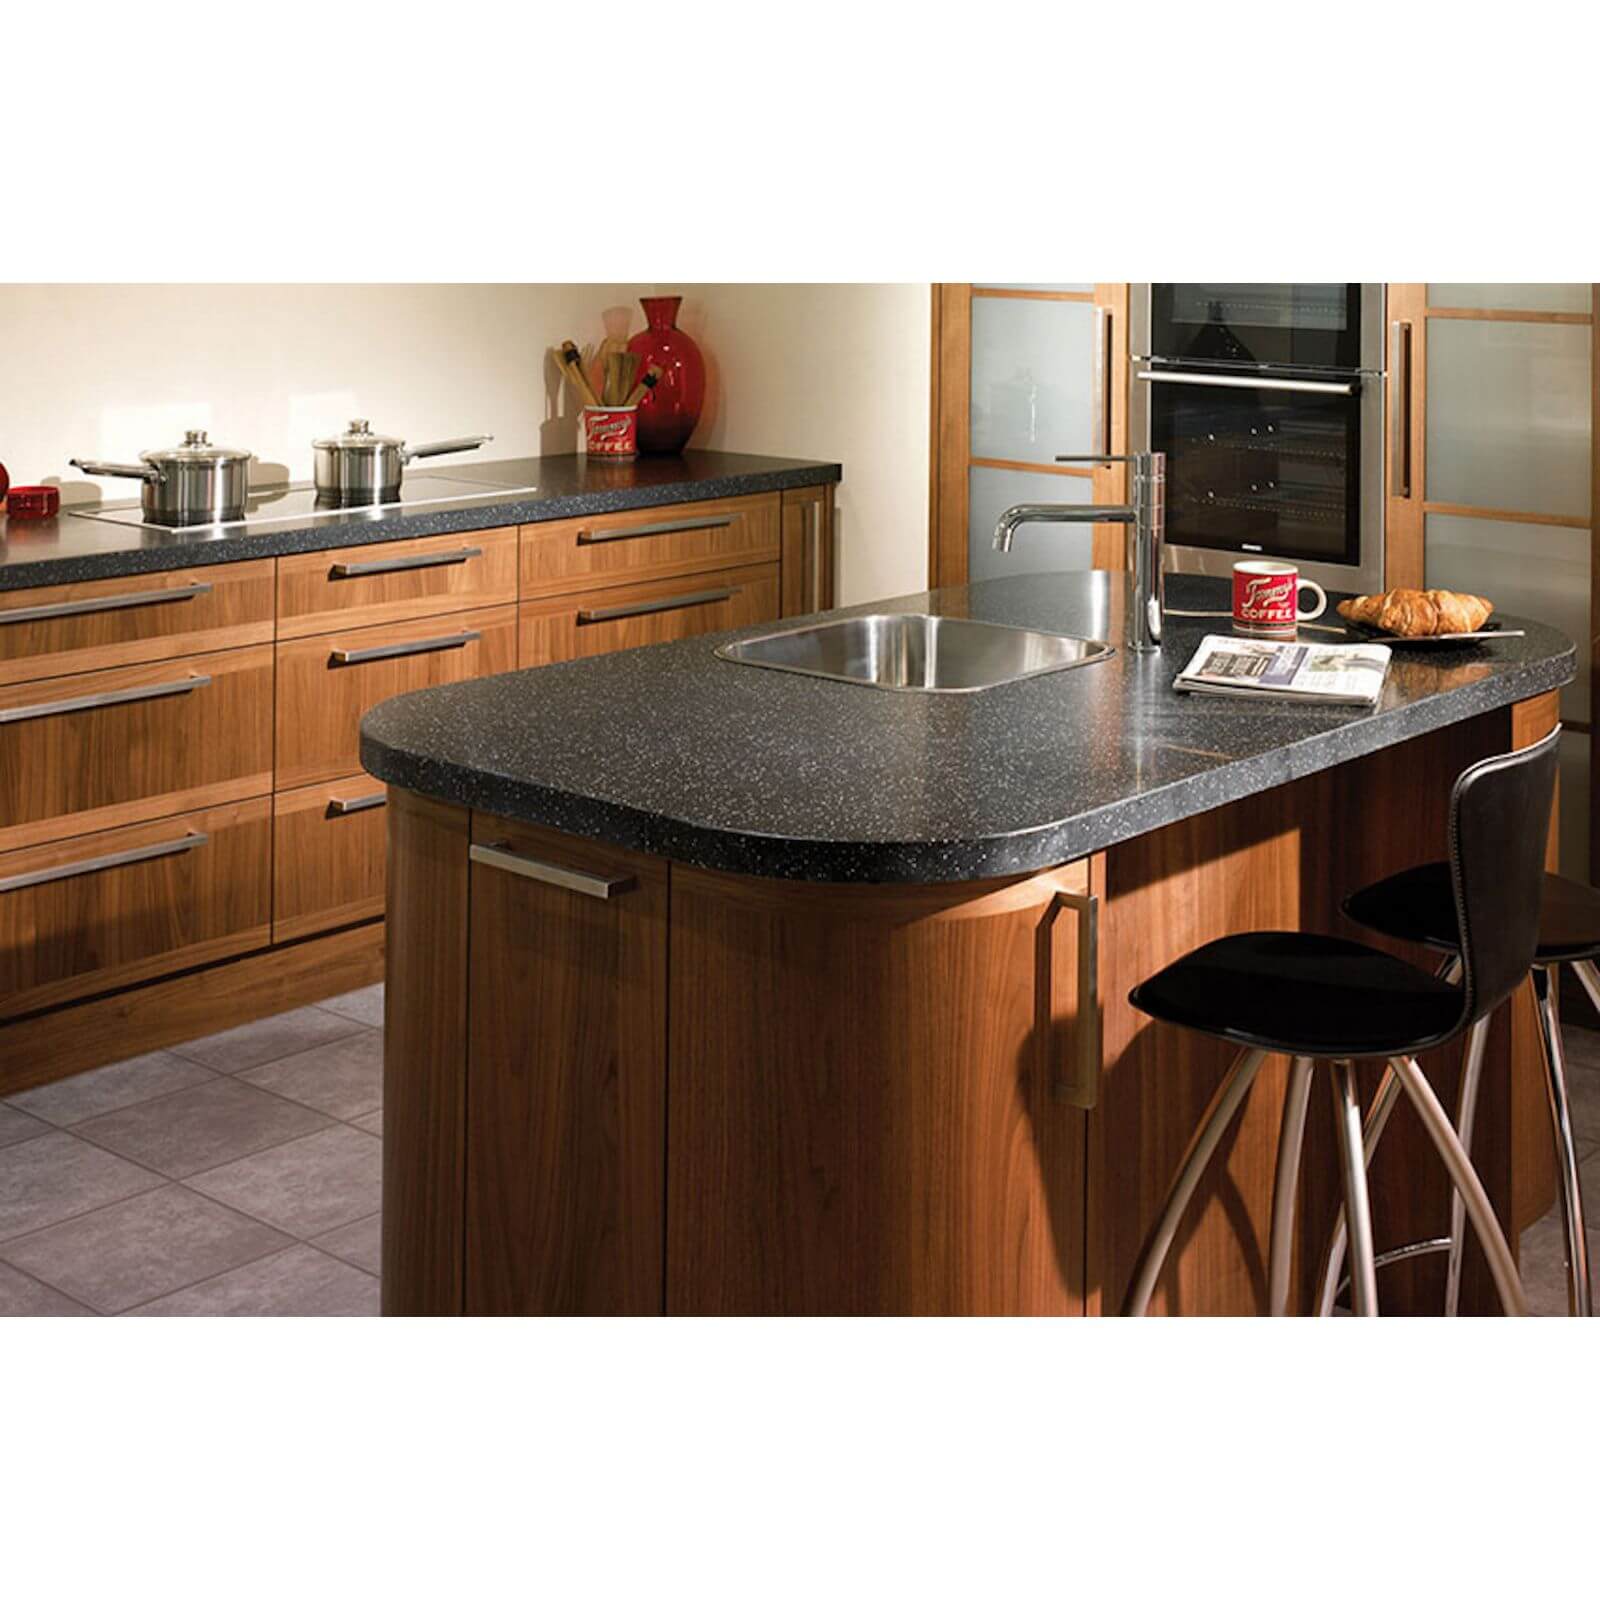 Maia Vulcano Kitchen Sink Worktop - Universal Super Large Bowl - 1800 x 600 x 28mm